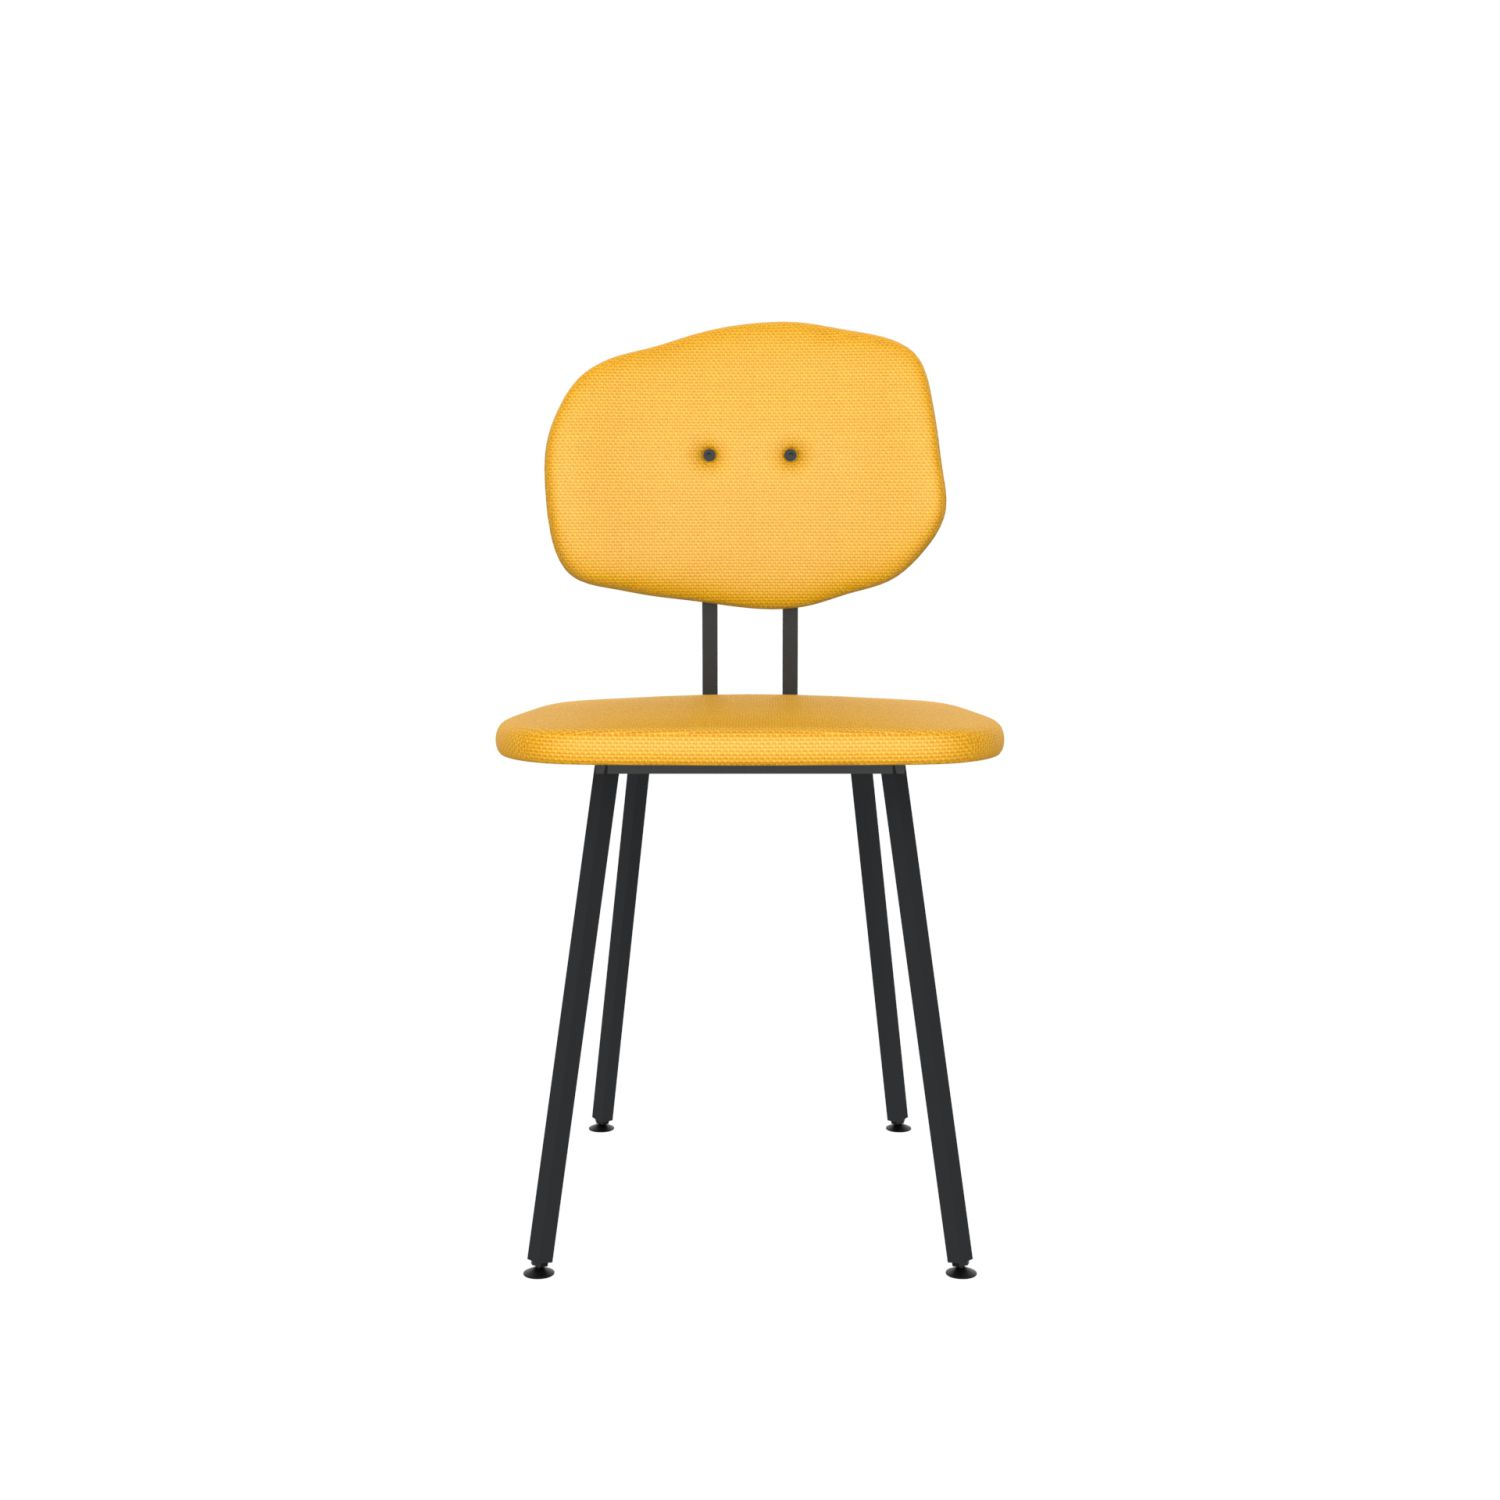 lensvelt maarten baas chair 101 not stackable without armrests backrest e lemon yellow 051 black ral9005 hard leg ends